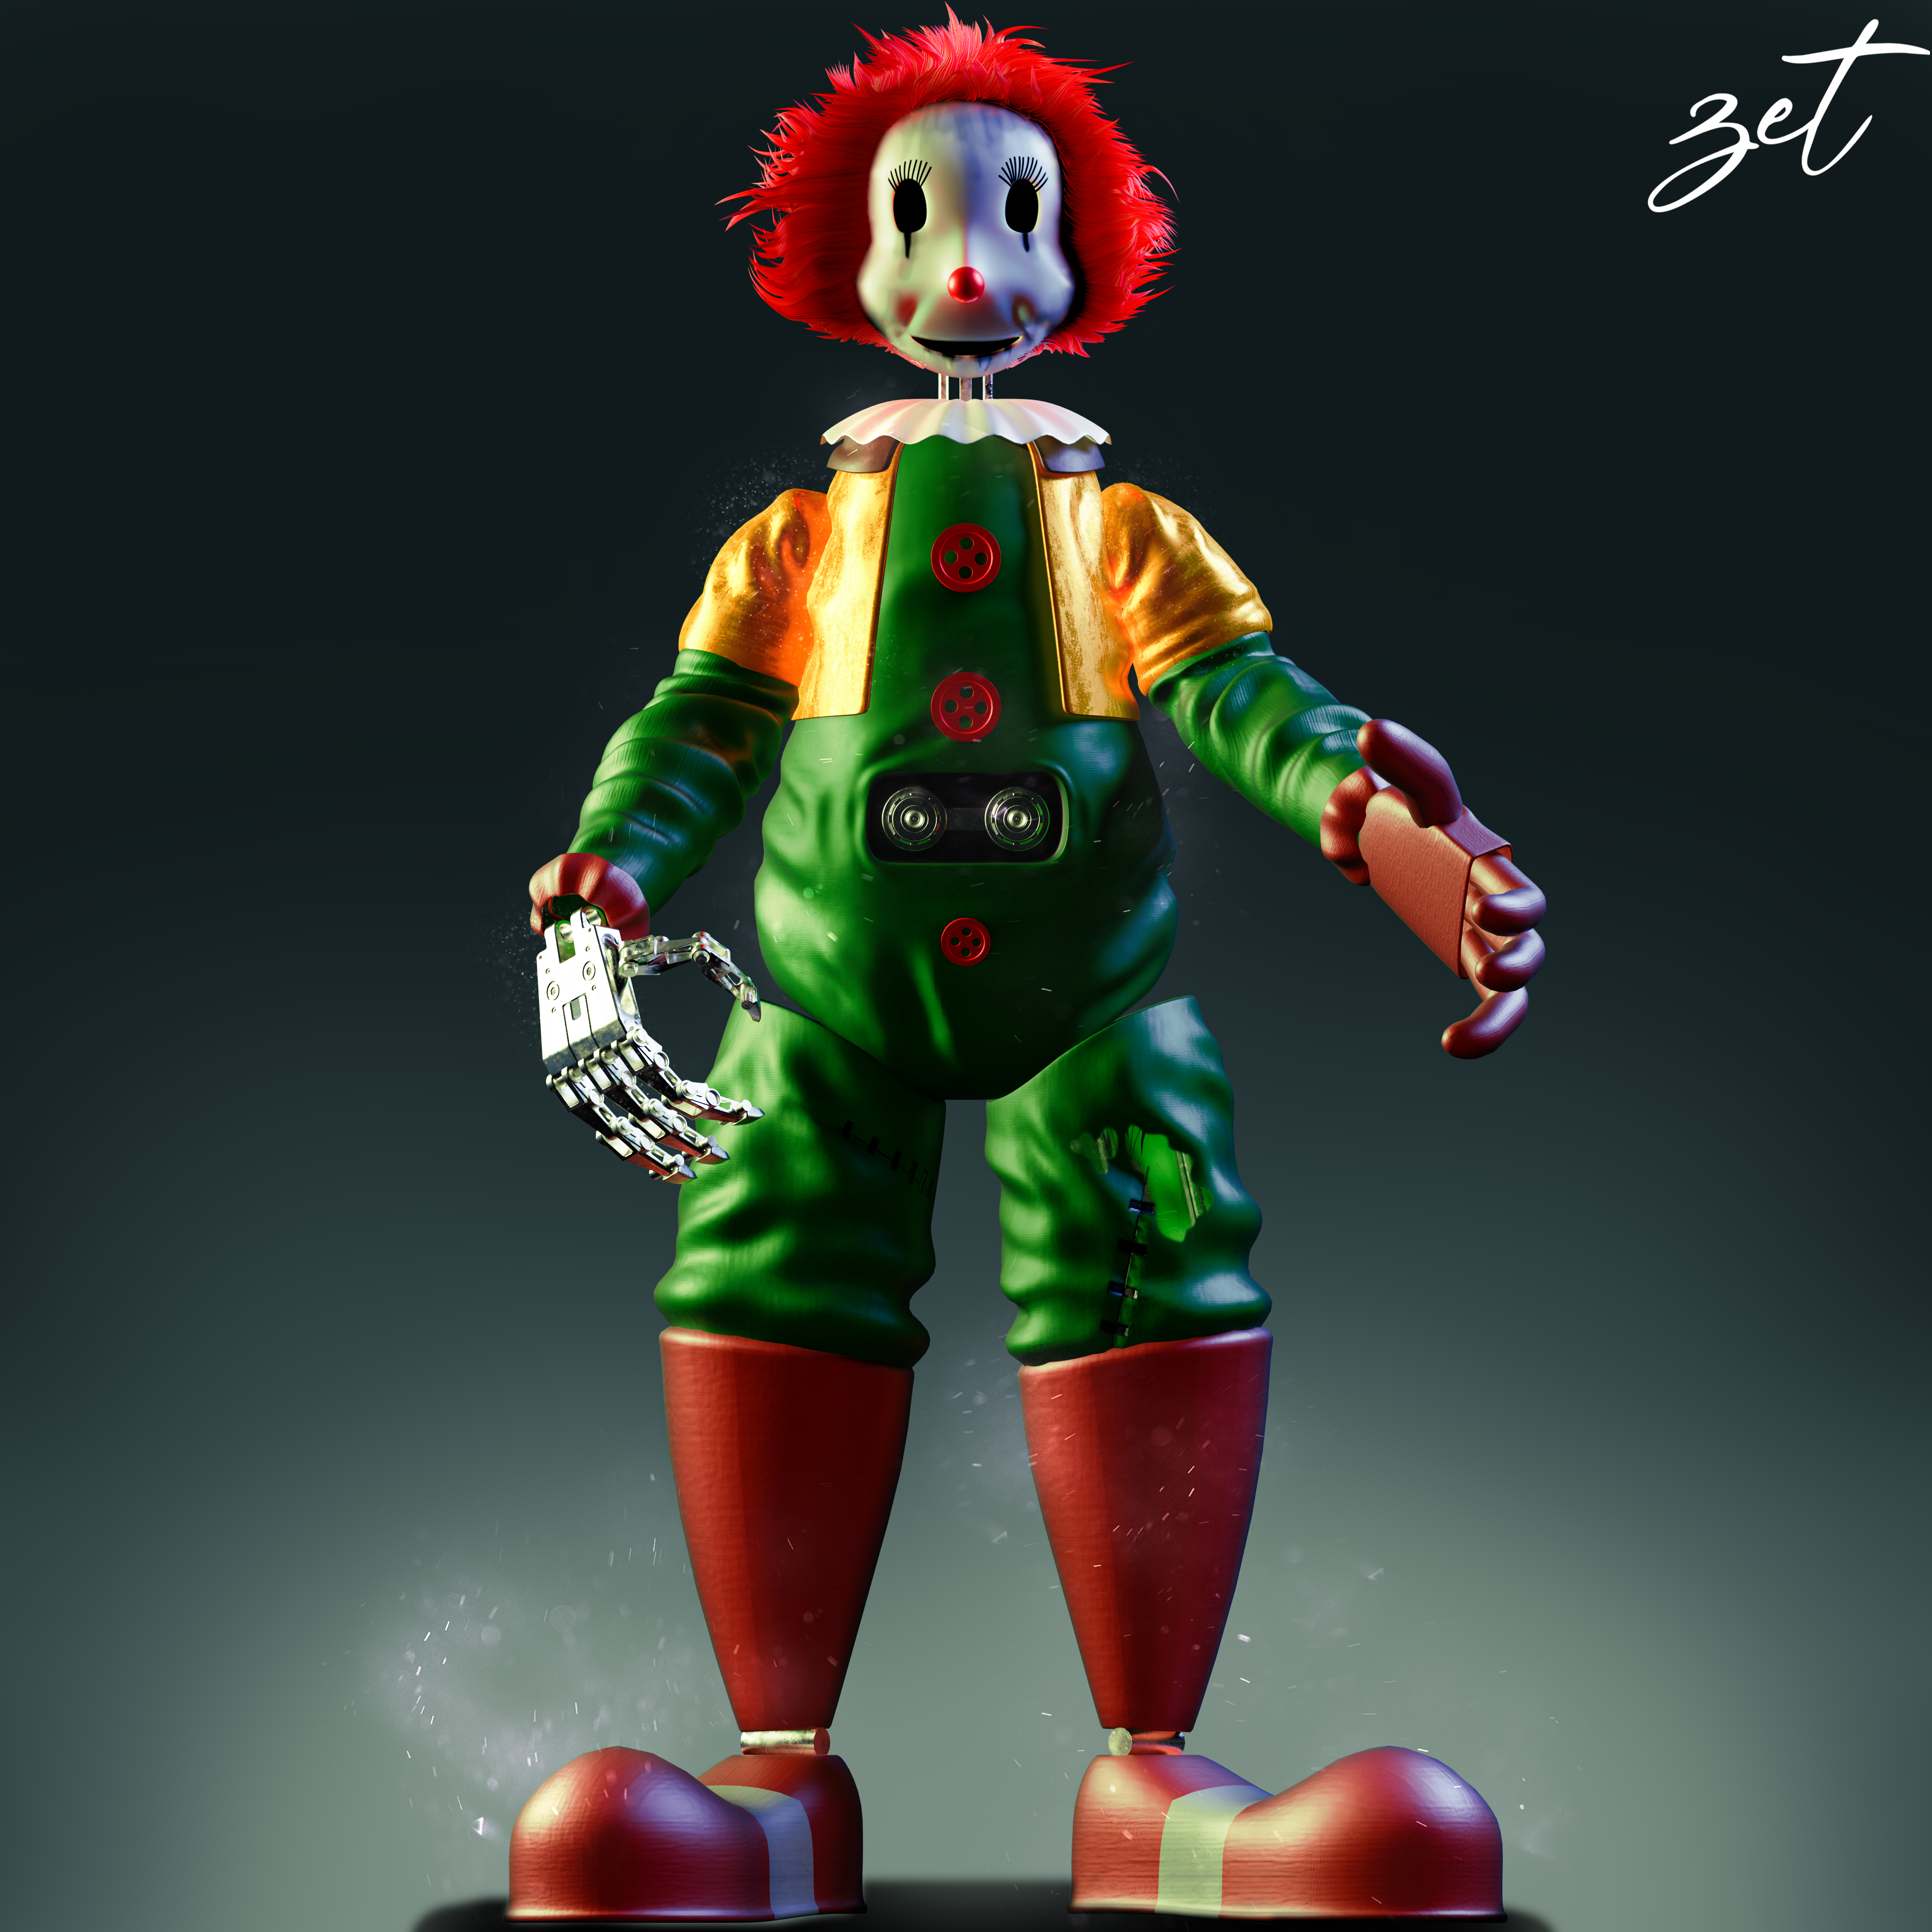 Billy The Clown - The Walten Files by XanthicZet on DeviantArt